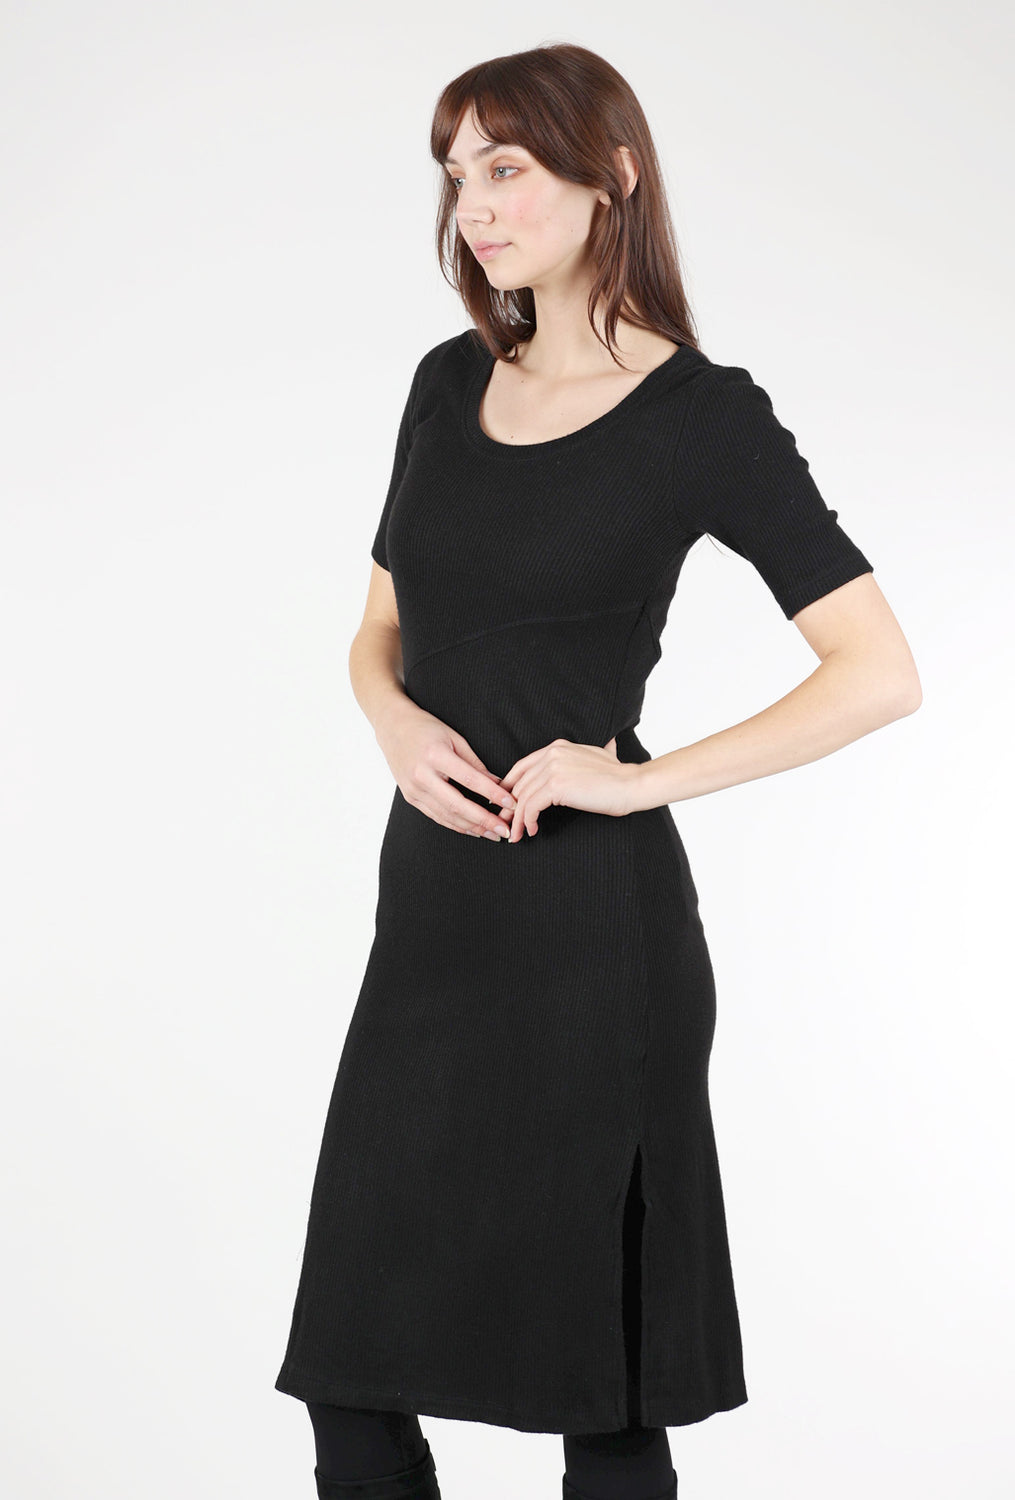 Mododoc Half-Sleeve Rib Midi Dress, Black 